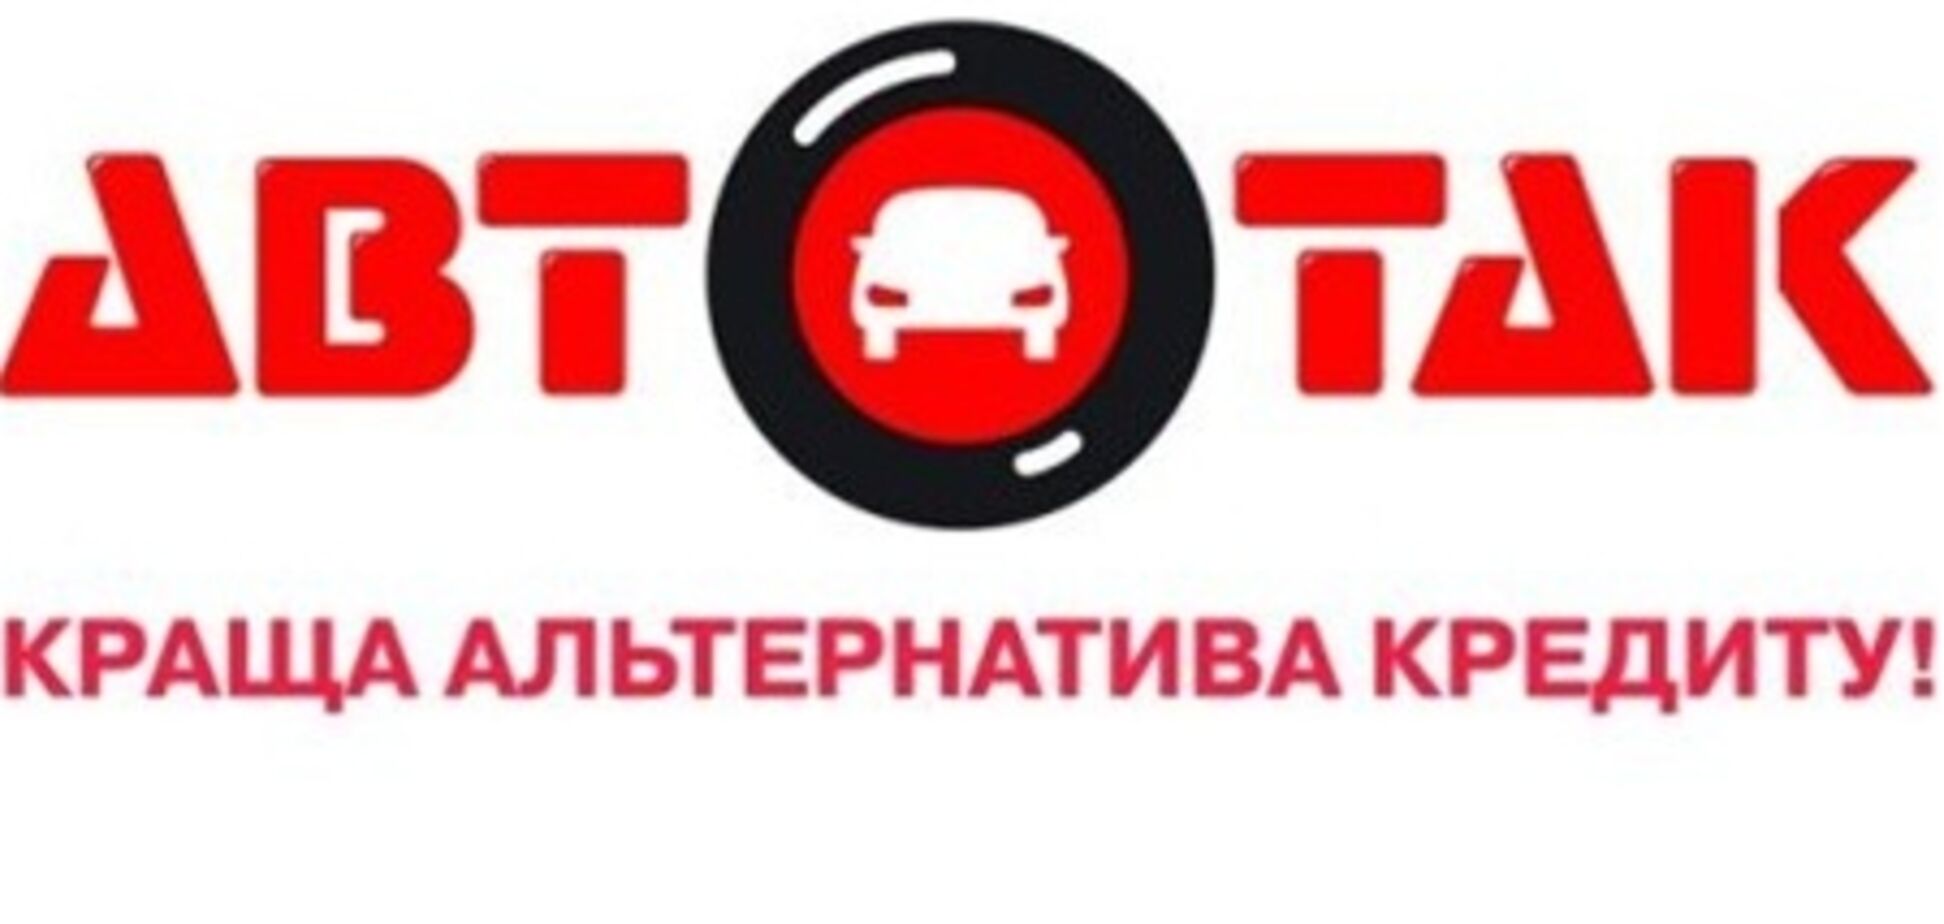 Чому АвтоТак - не розлучення? www.autotak.com.ua